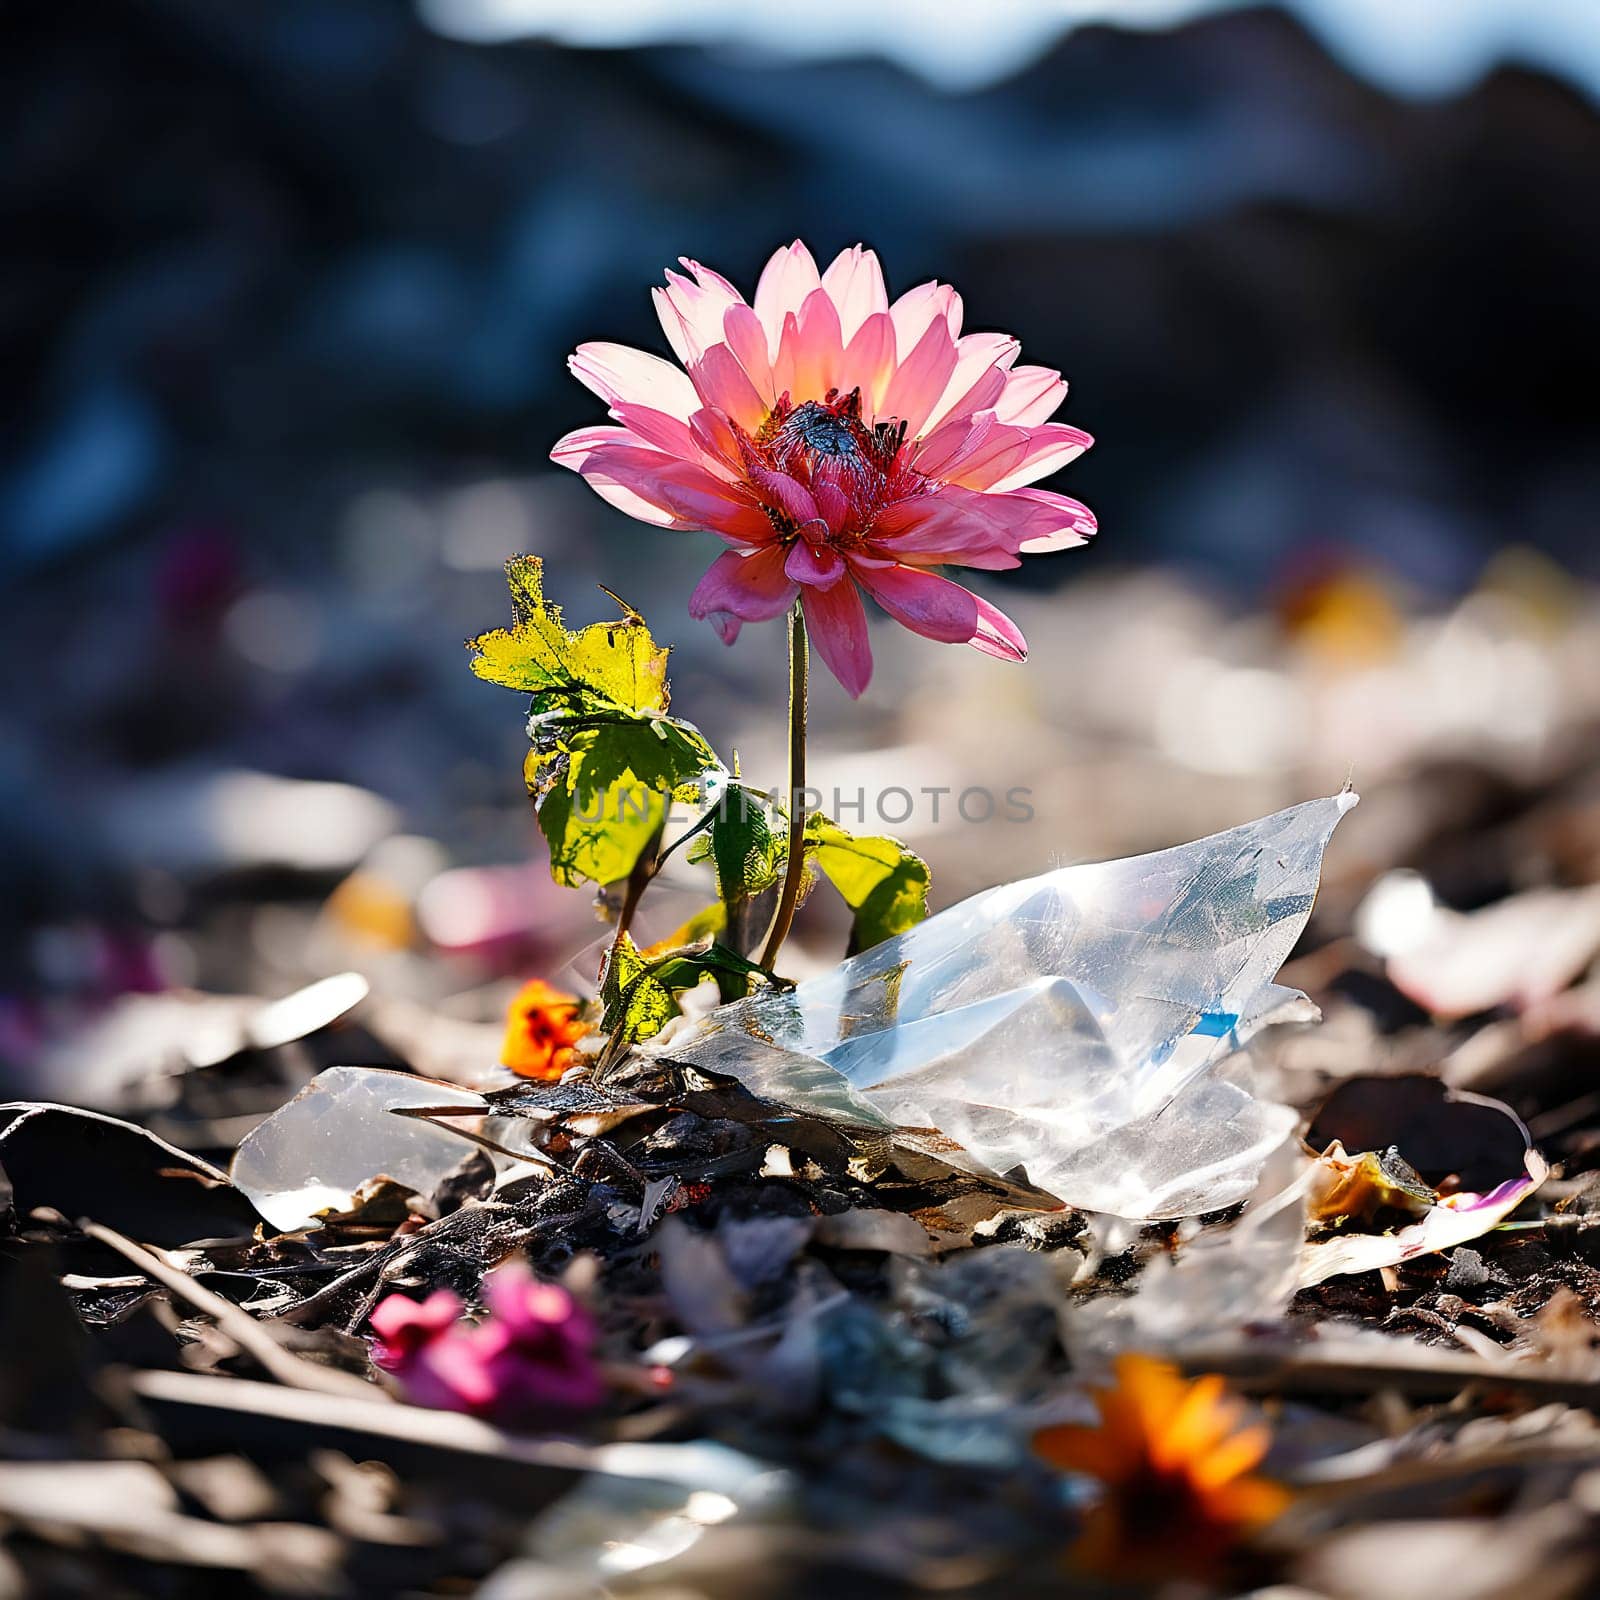 Pink flower among mountains of garbage by VeronikaAngo